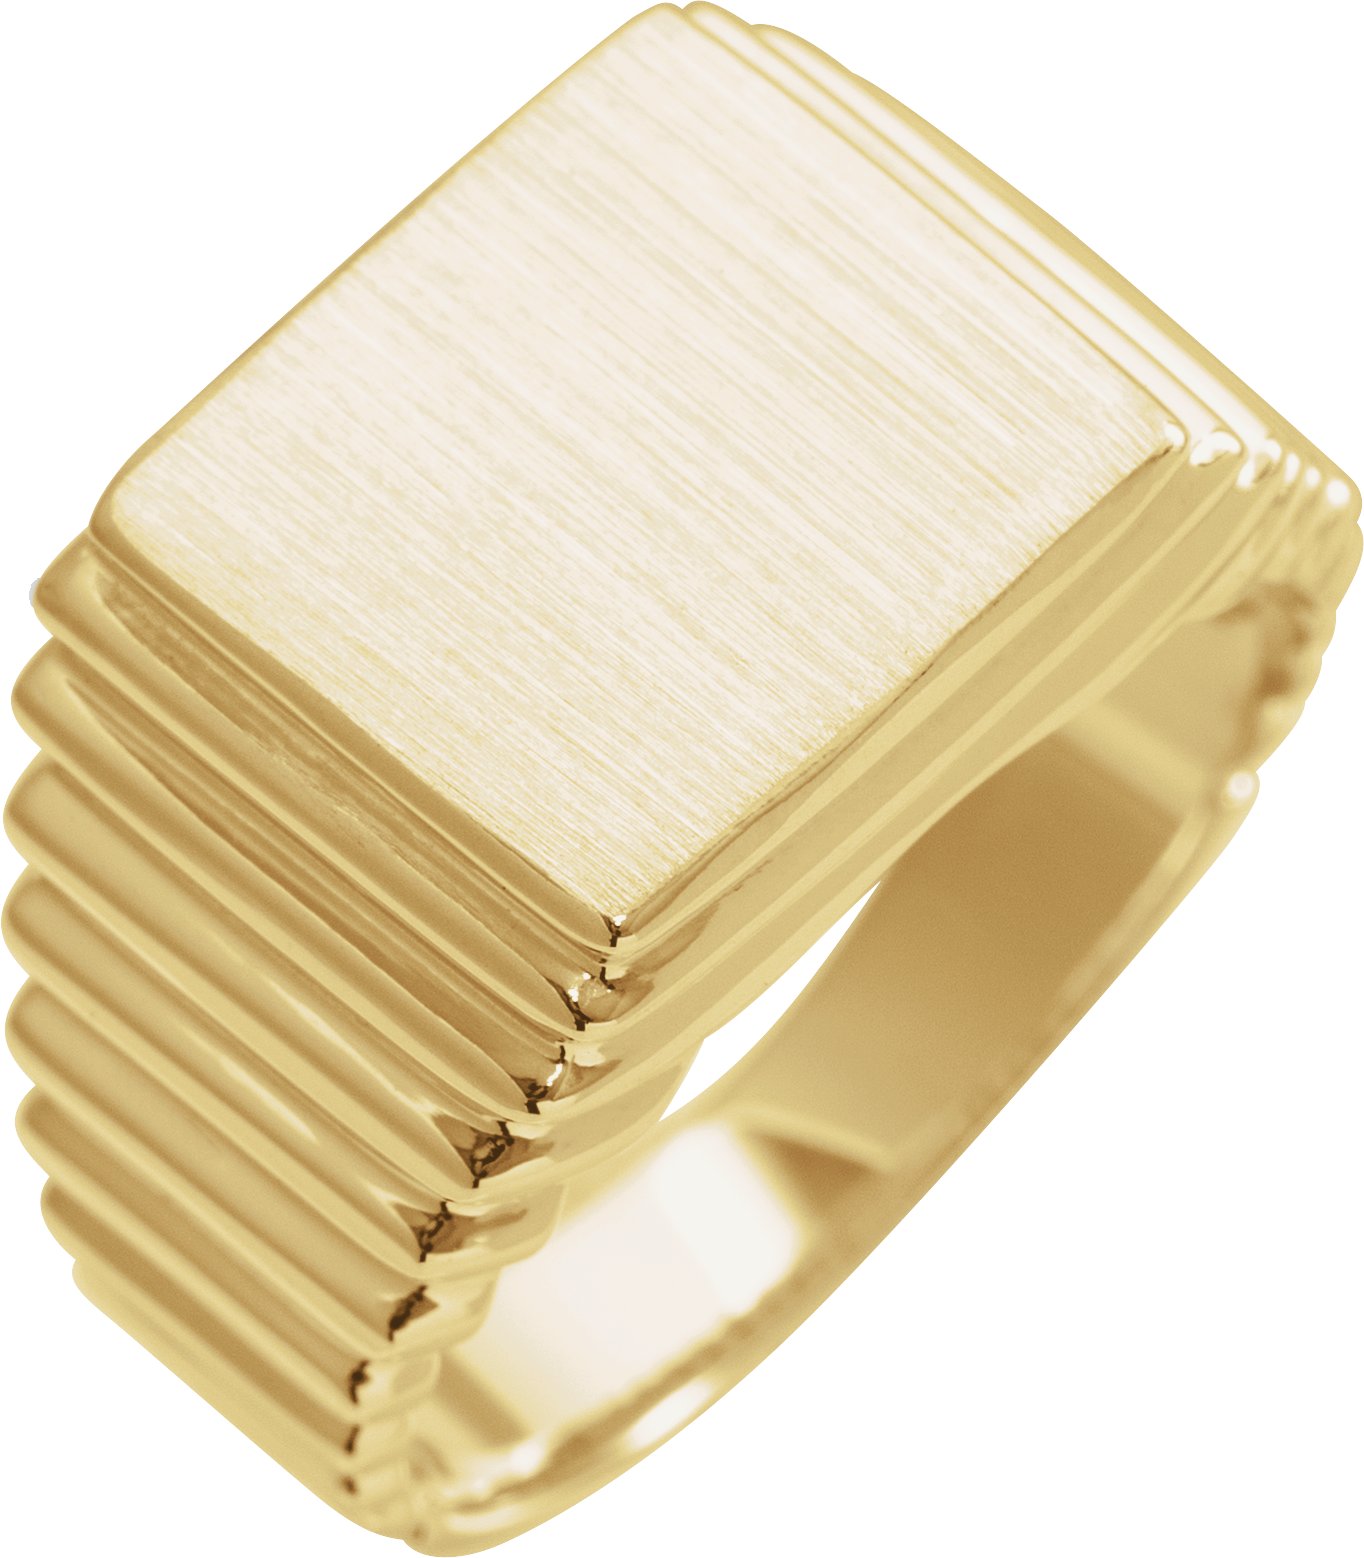 14K Yellow 14x13 mm Rectangle Signet Ring